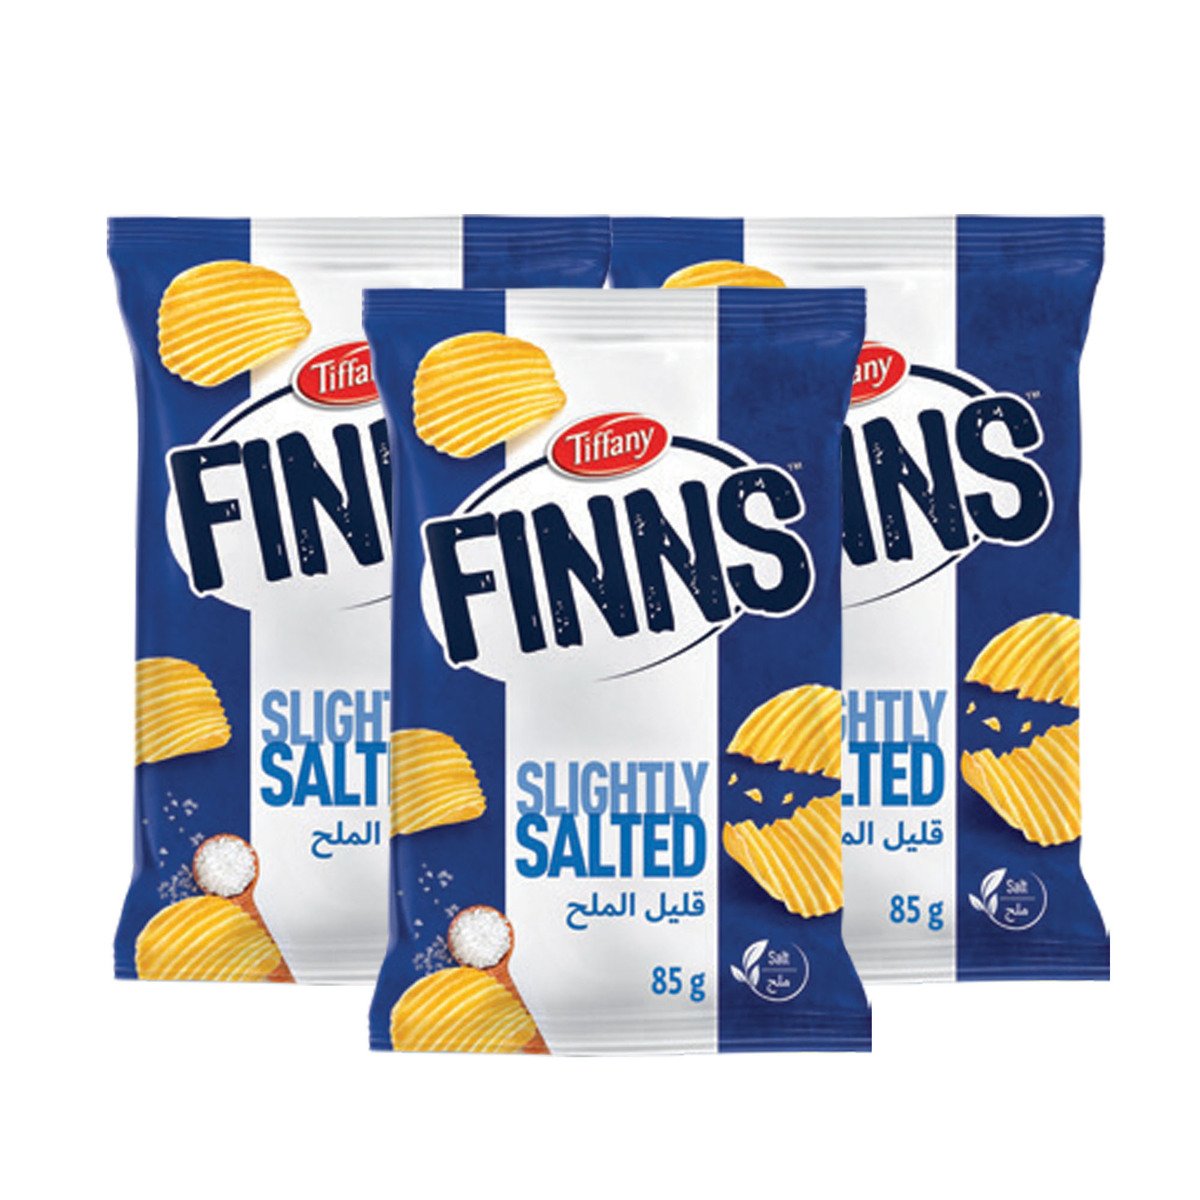 Tiffany Finns Chips Assorted 3 x 85 g